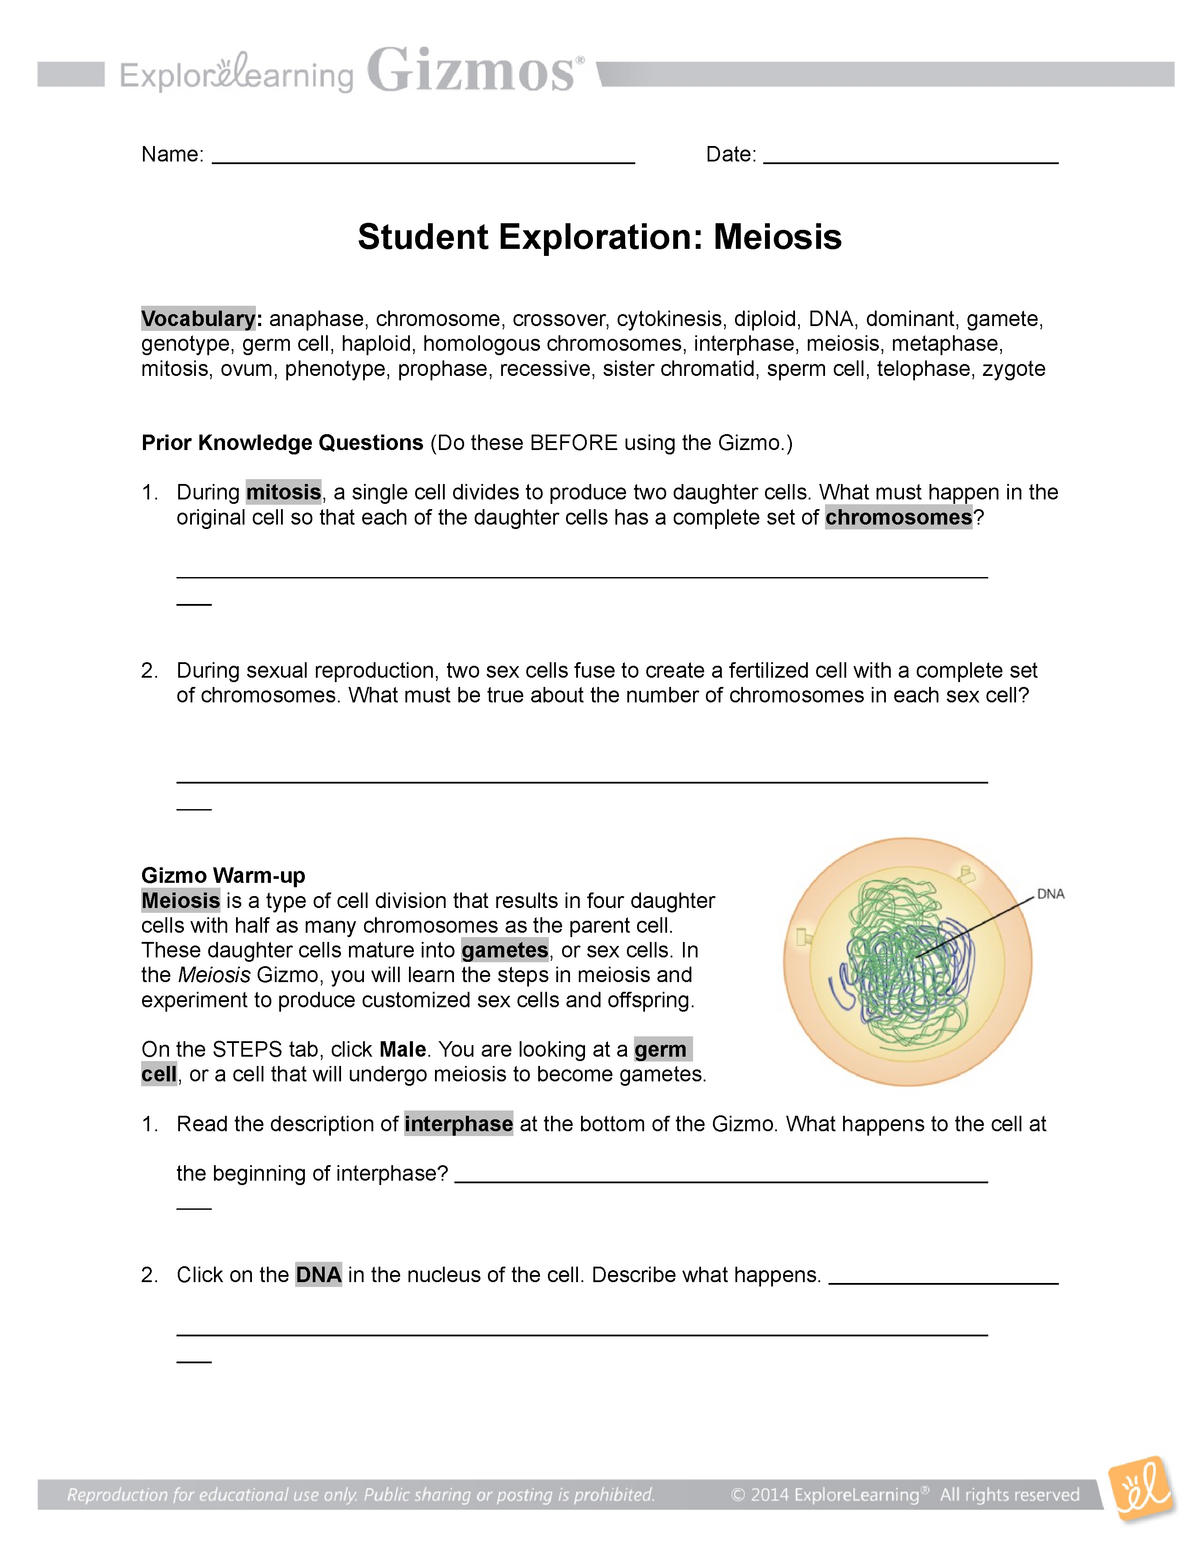 Student Exploration Meiosis Gizmo Answer Key / 2 - Calvin Manotty